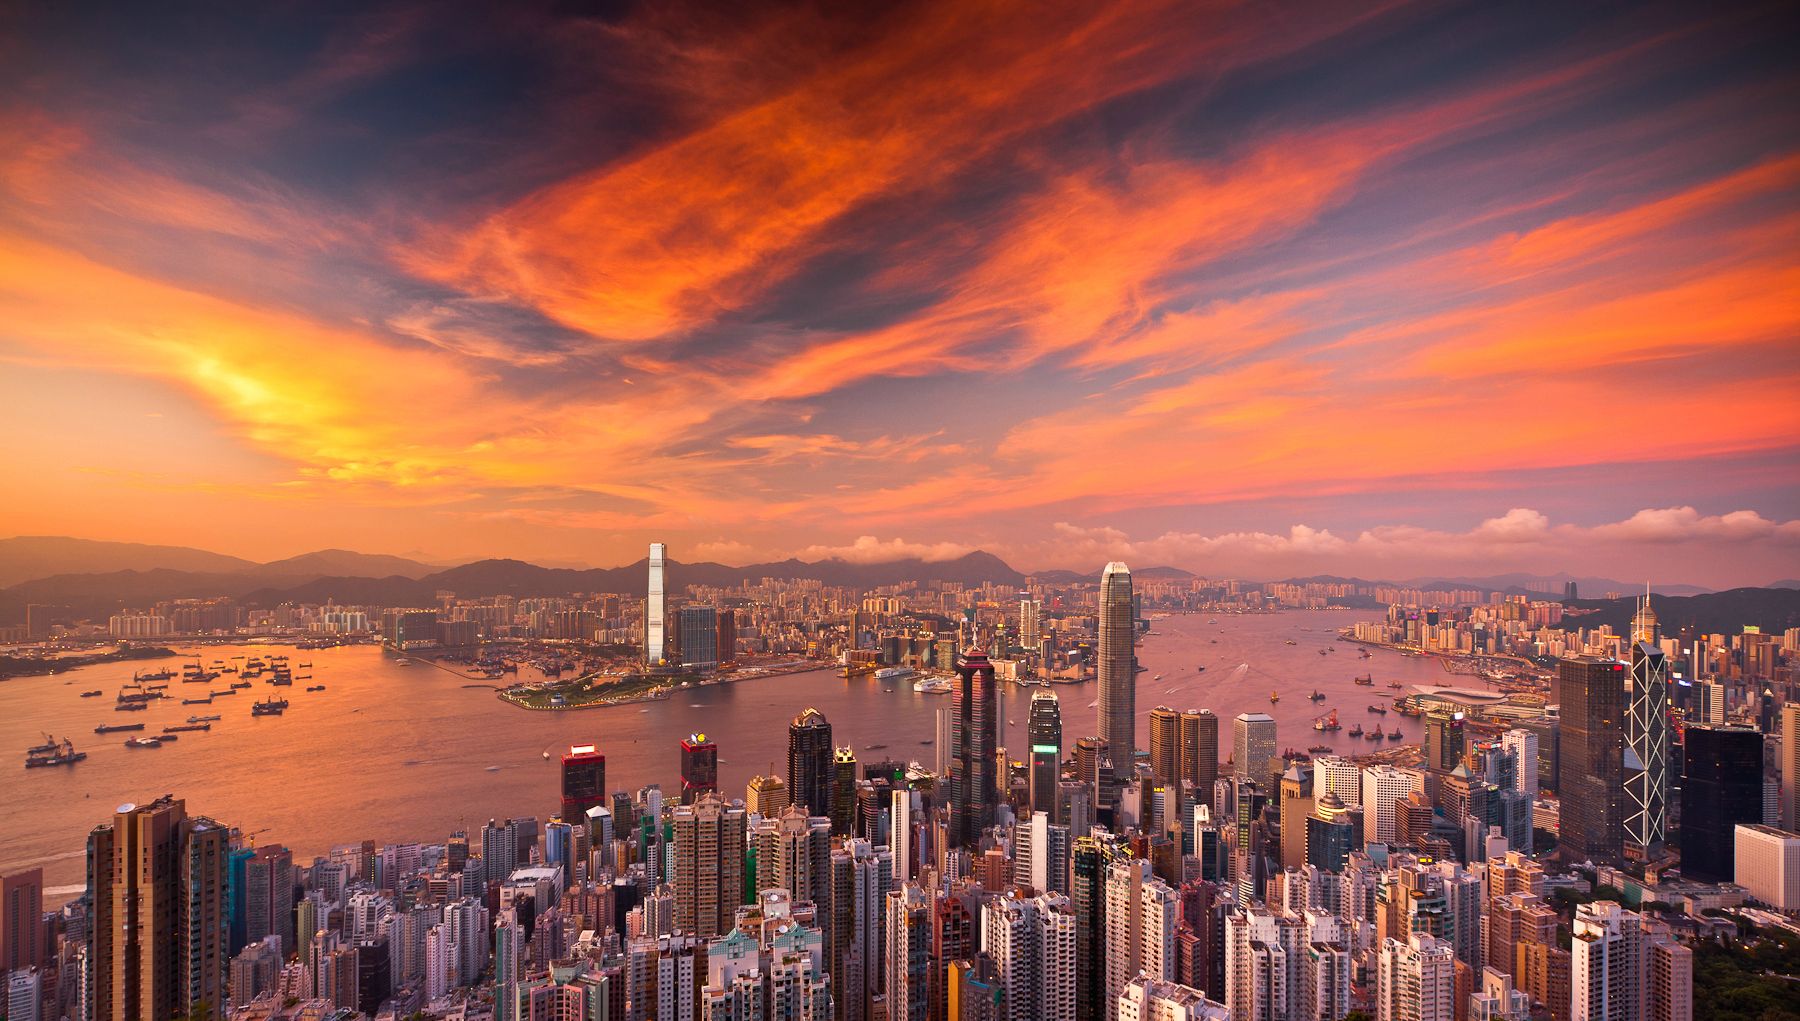 Download wallpapers Hong Kong in evening, 4k, metropolis, skyline,  skyscrapers, modern buildings, asian cities, China, Hong Kong, Asia for  desktop free. Pictures for desktop free